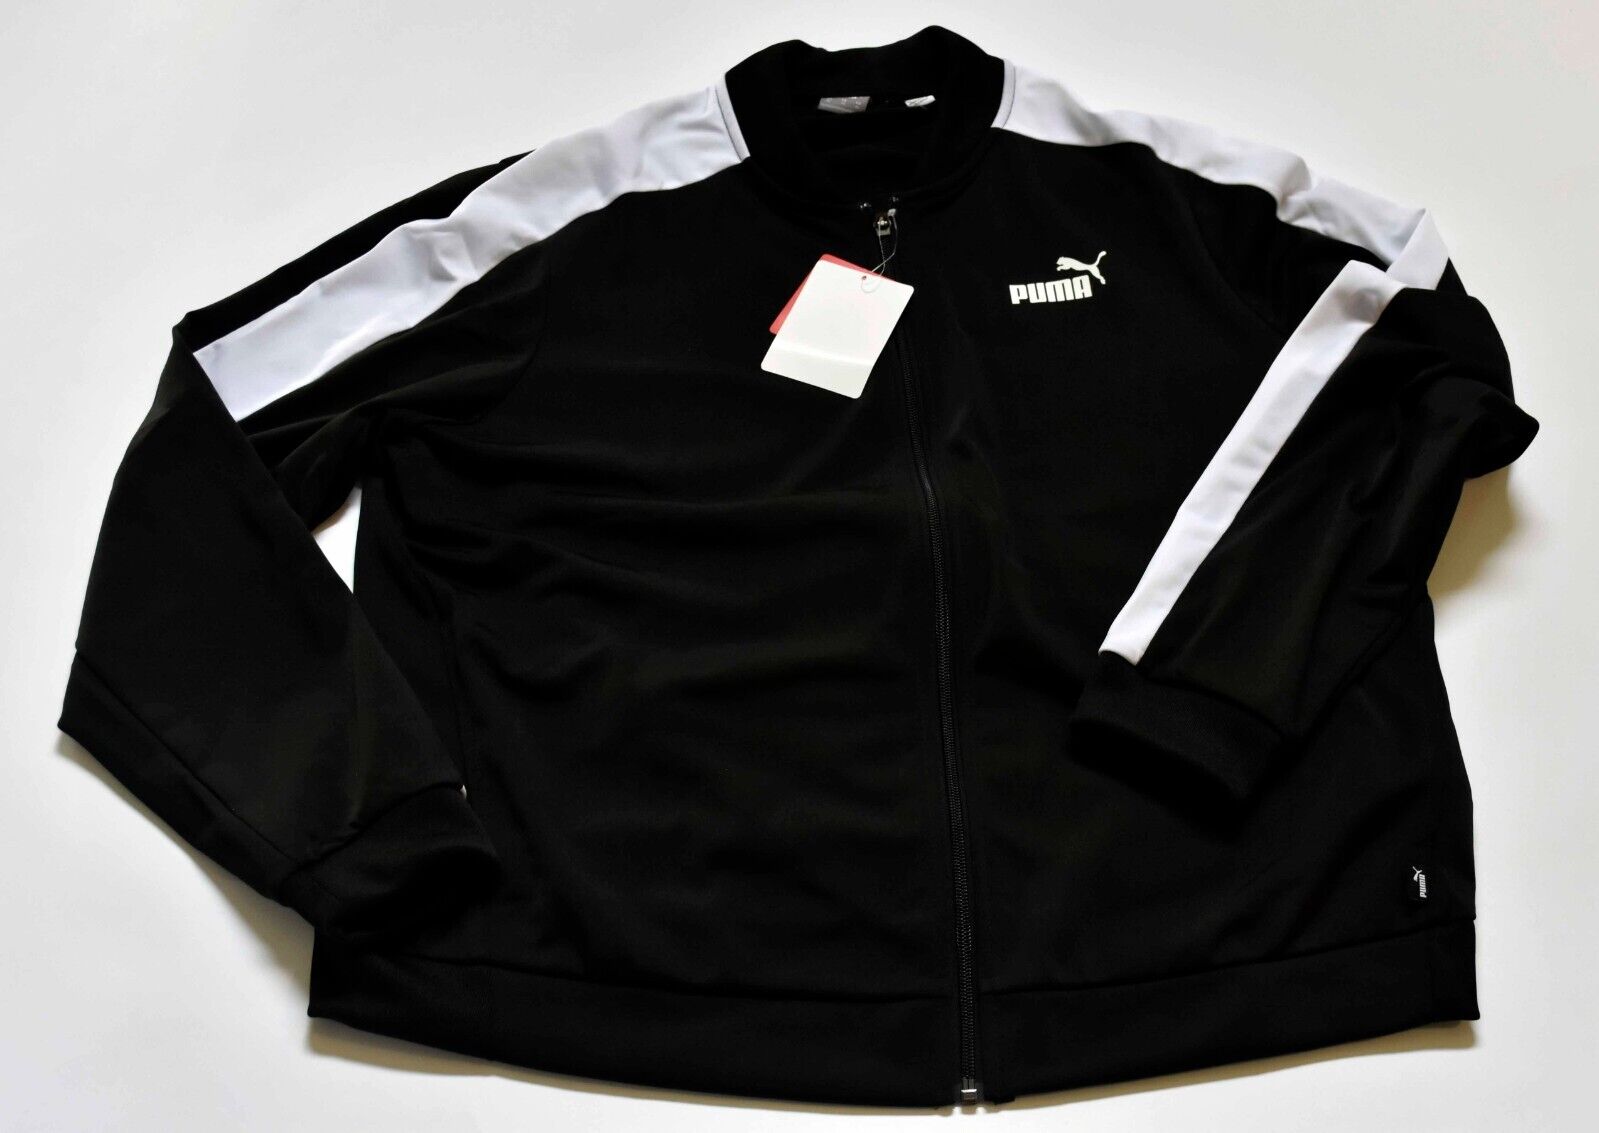 Puma Men's Track Jacket Black Size XL - NWT | eBay